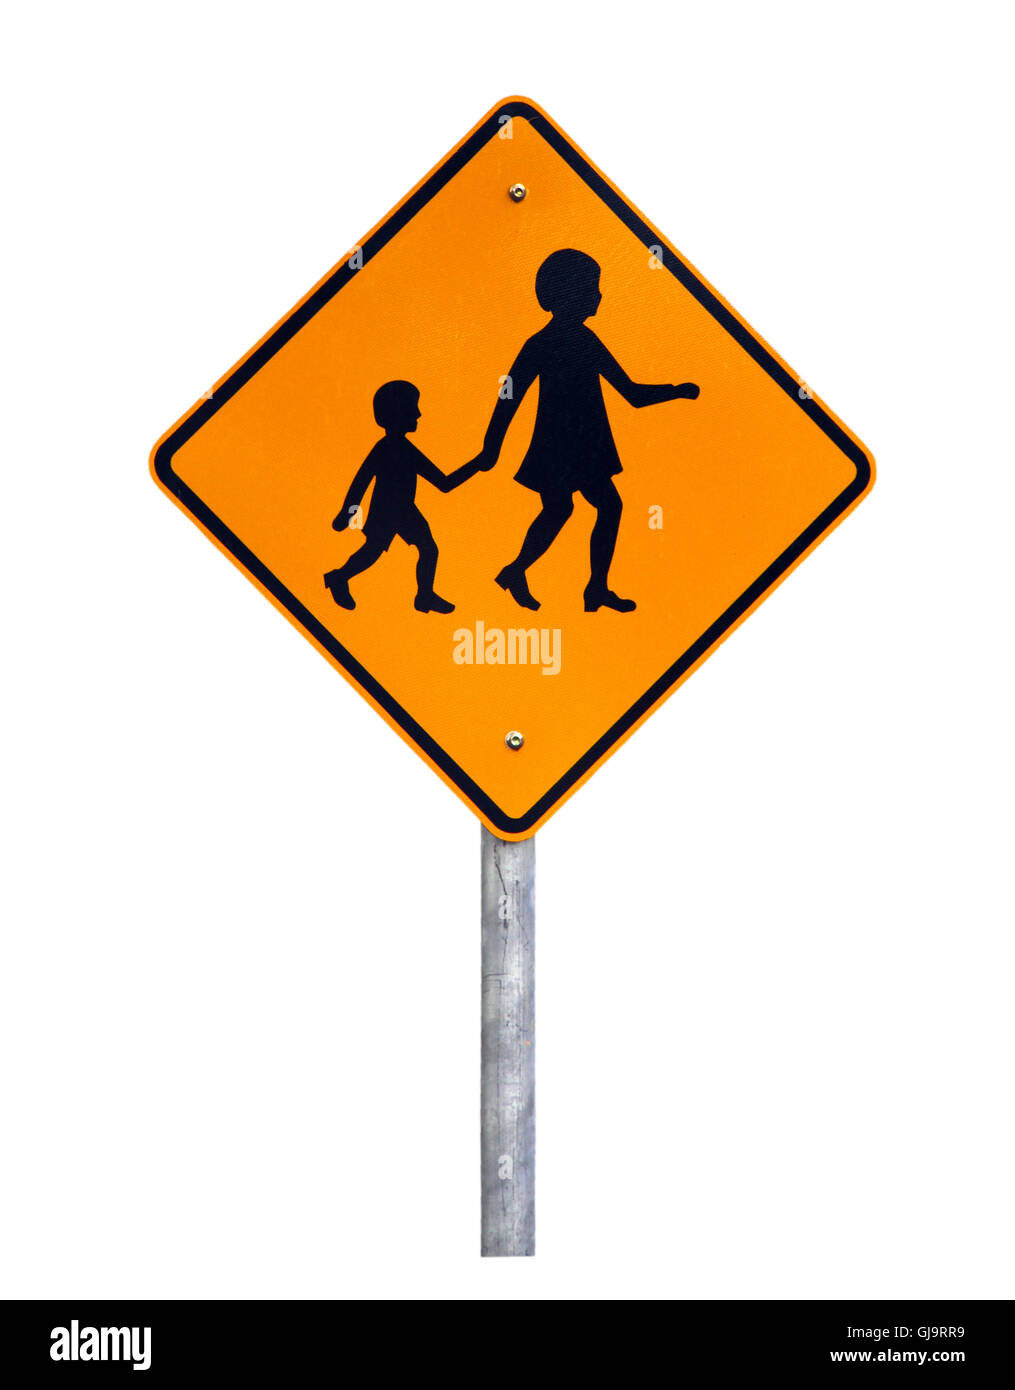 Enfants Avertissement Crossing - Australian Road Sign Banque D'Images